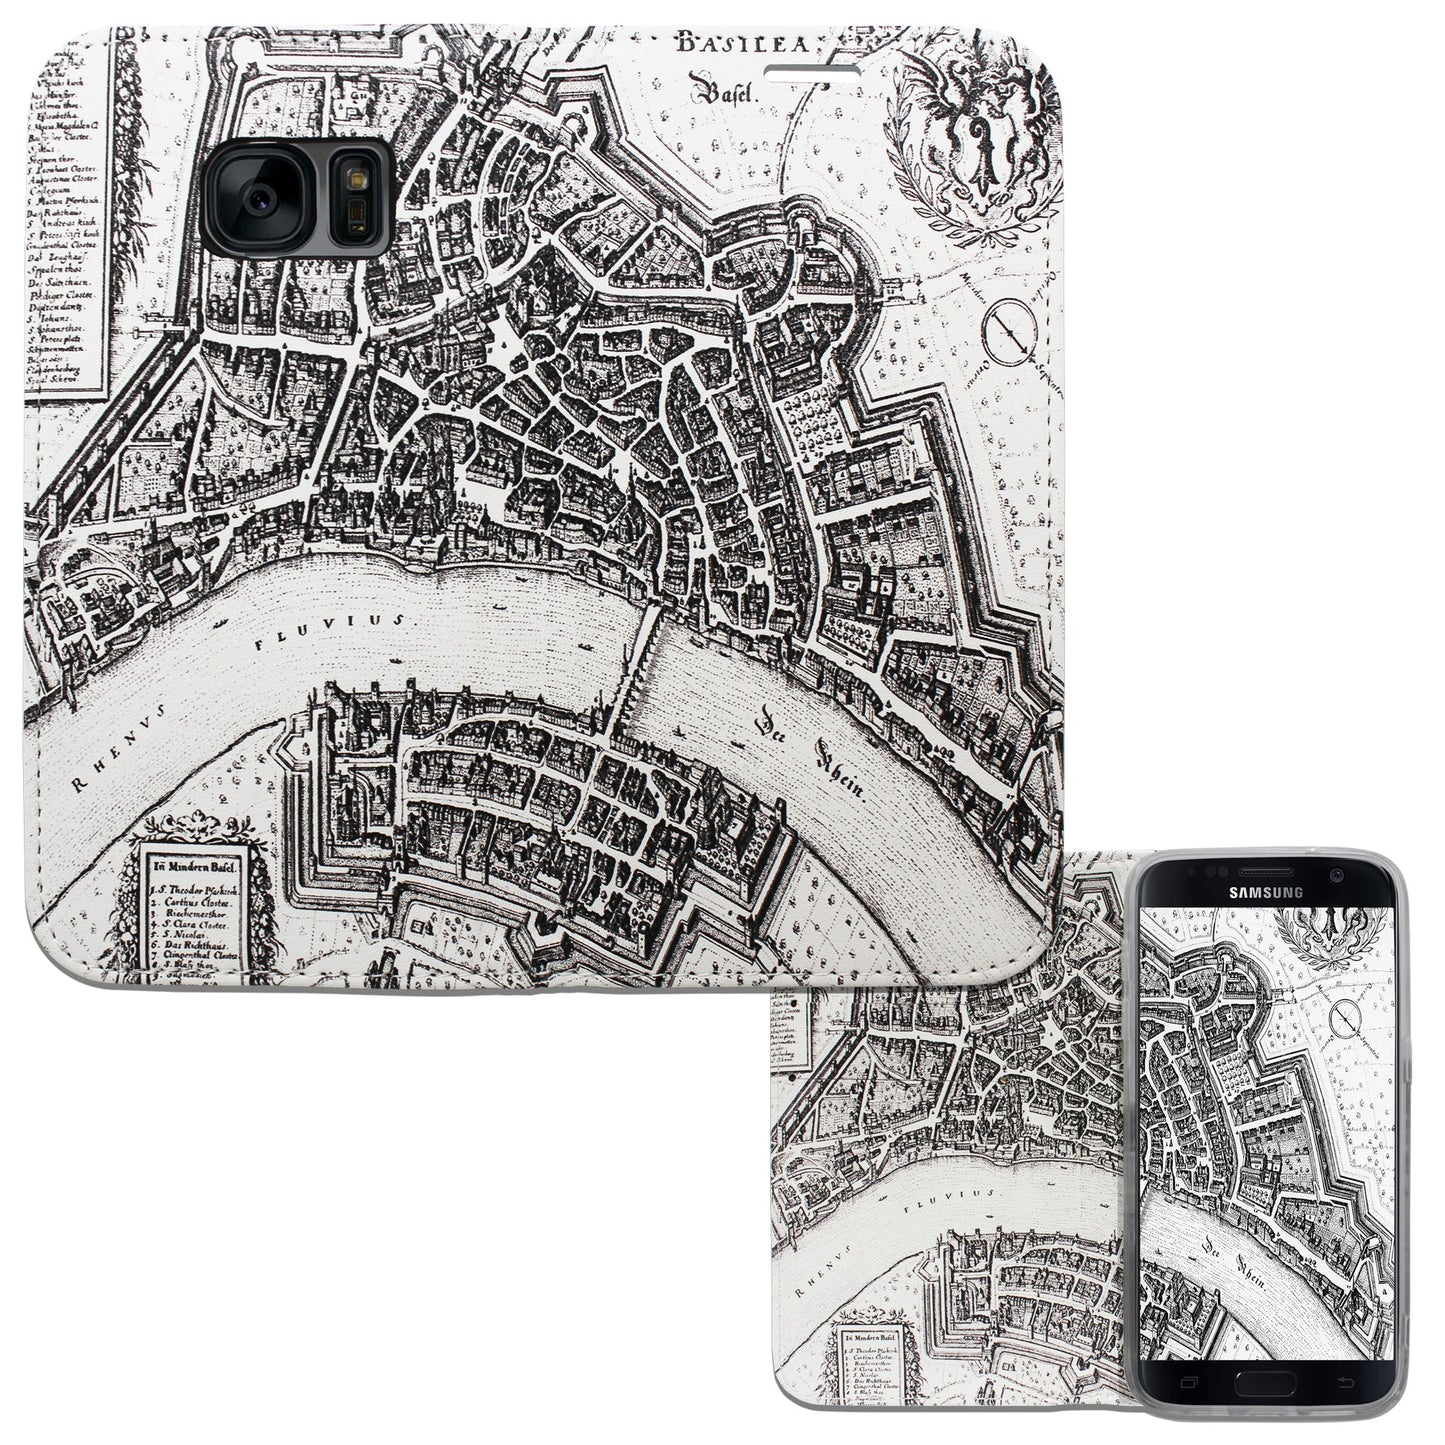 Basel Merian panorama case for Samsung Galaxy S7